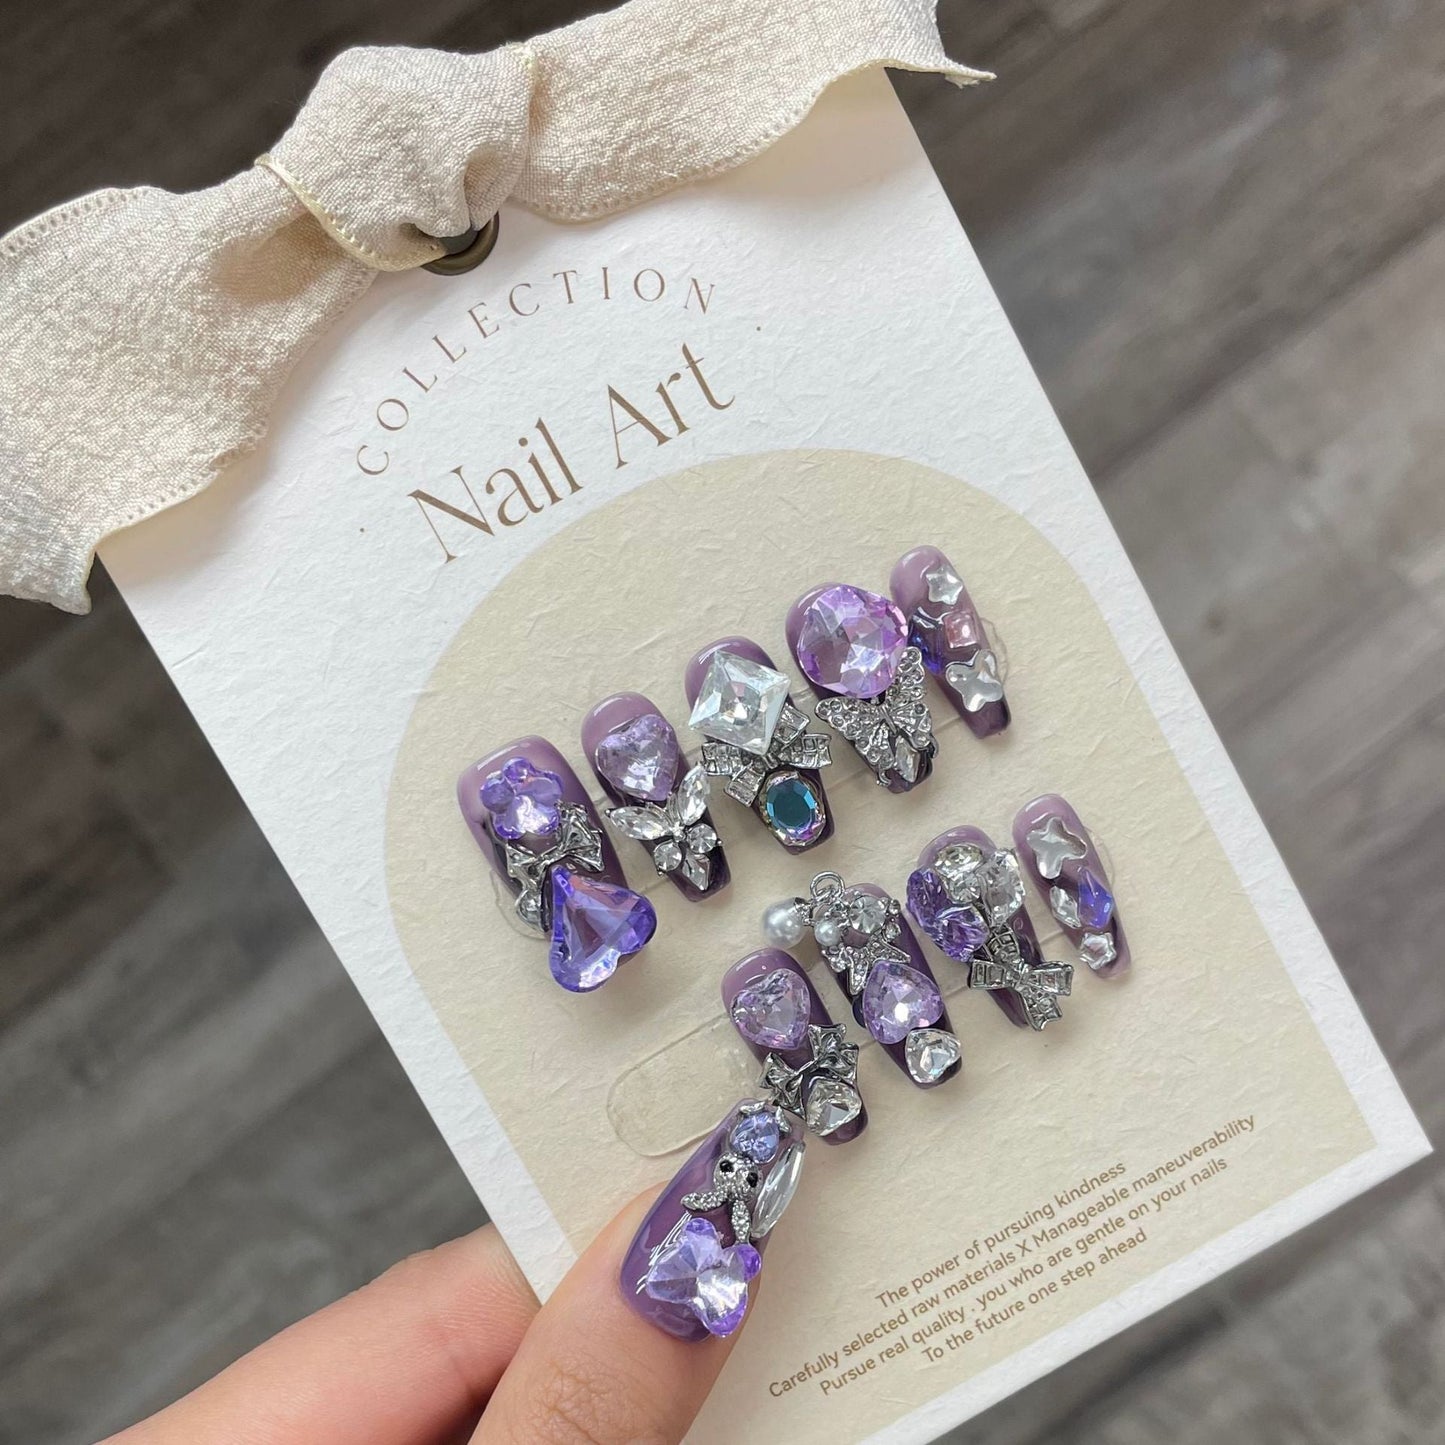 827 Butterfly Rhinestone style press on nails 100% handmade false nails purple